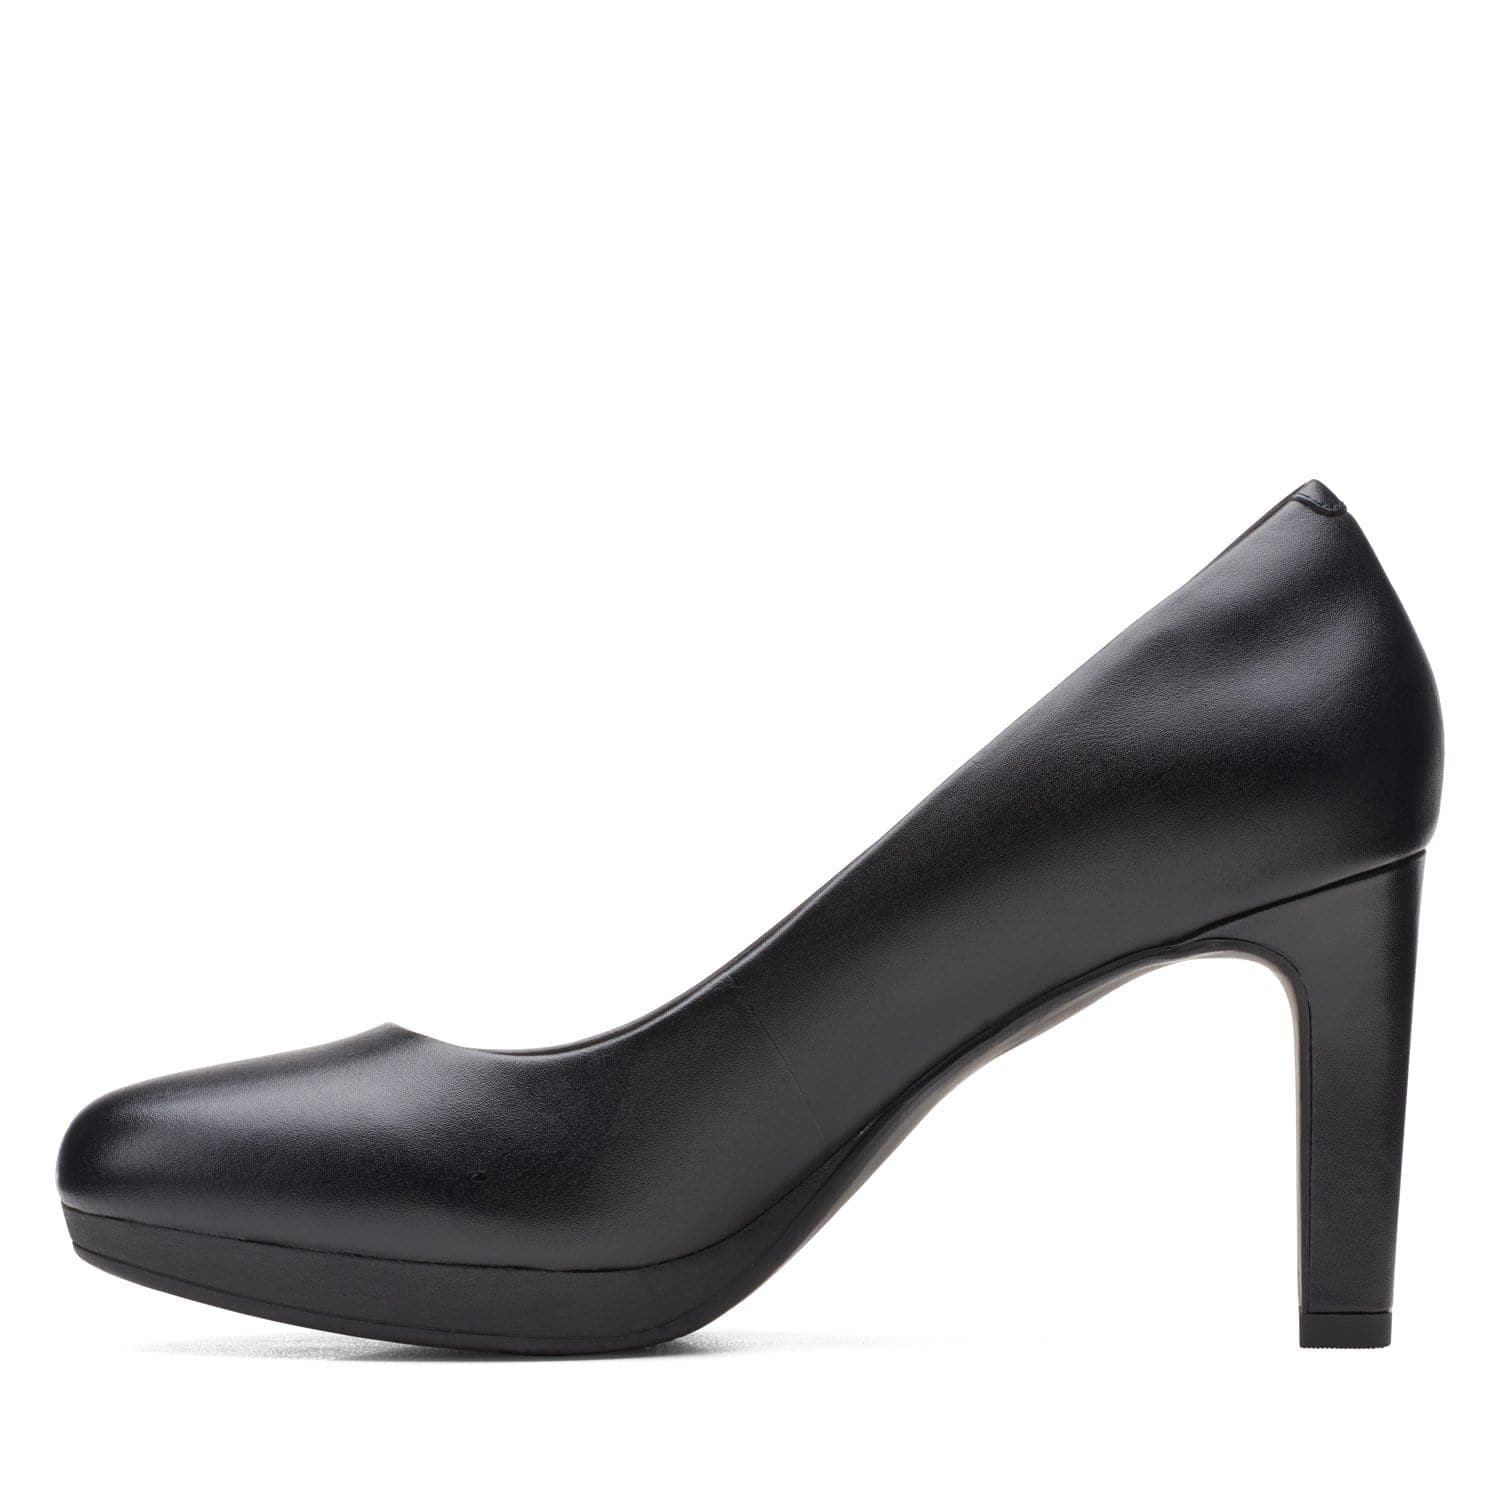 Clarks Ambyr Joy - Shoes - Black Leather - 261577644 - D Width (Standard Fit)